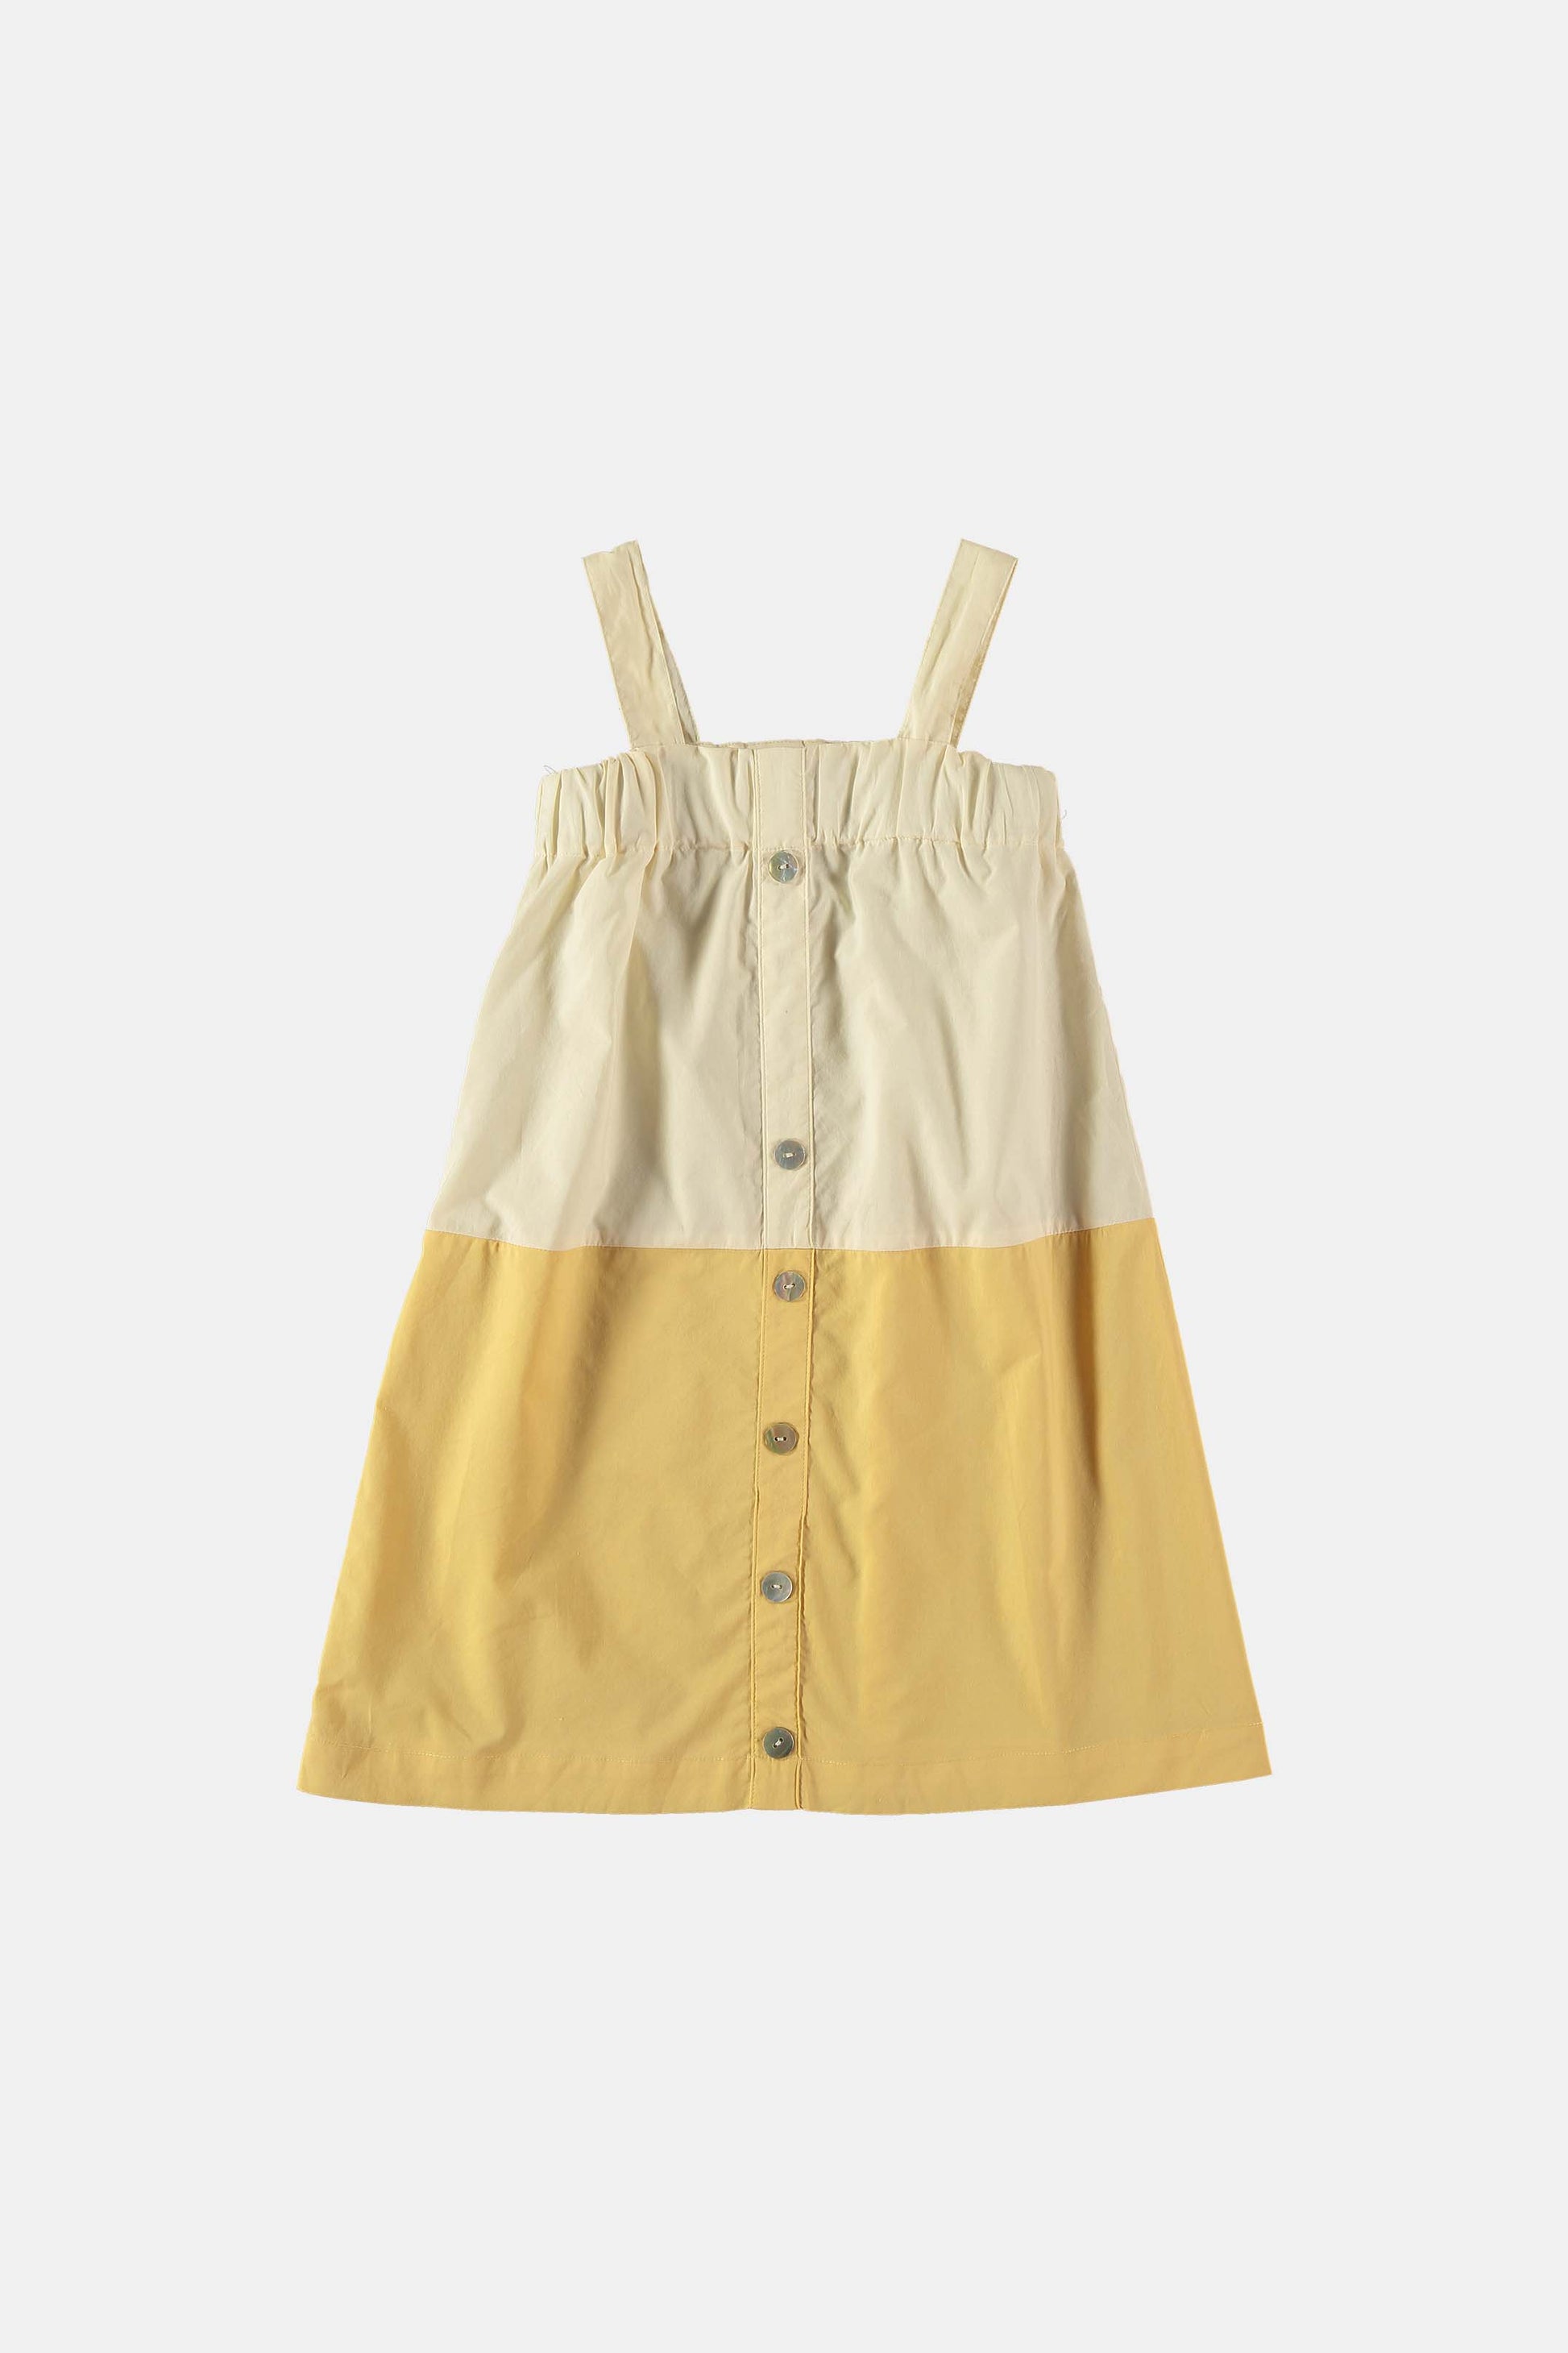 Coco Au Lait YELLOW VINTAGE SLEVEELESS DRESS  Yellow